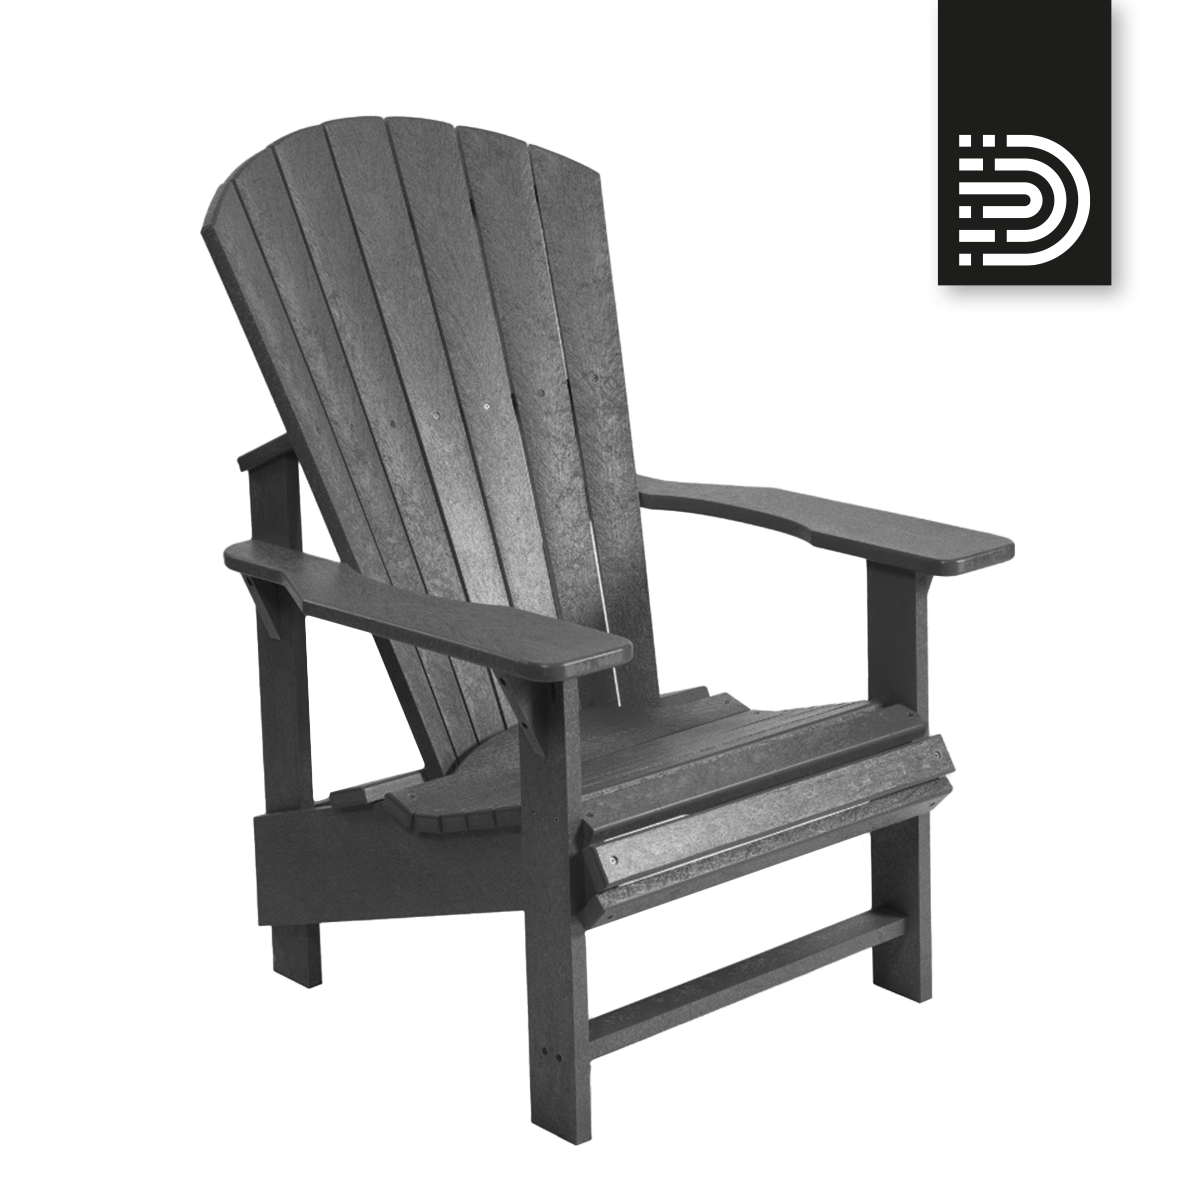 C03 Upright Adirondack Chair - slate grey 18